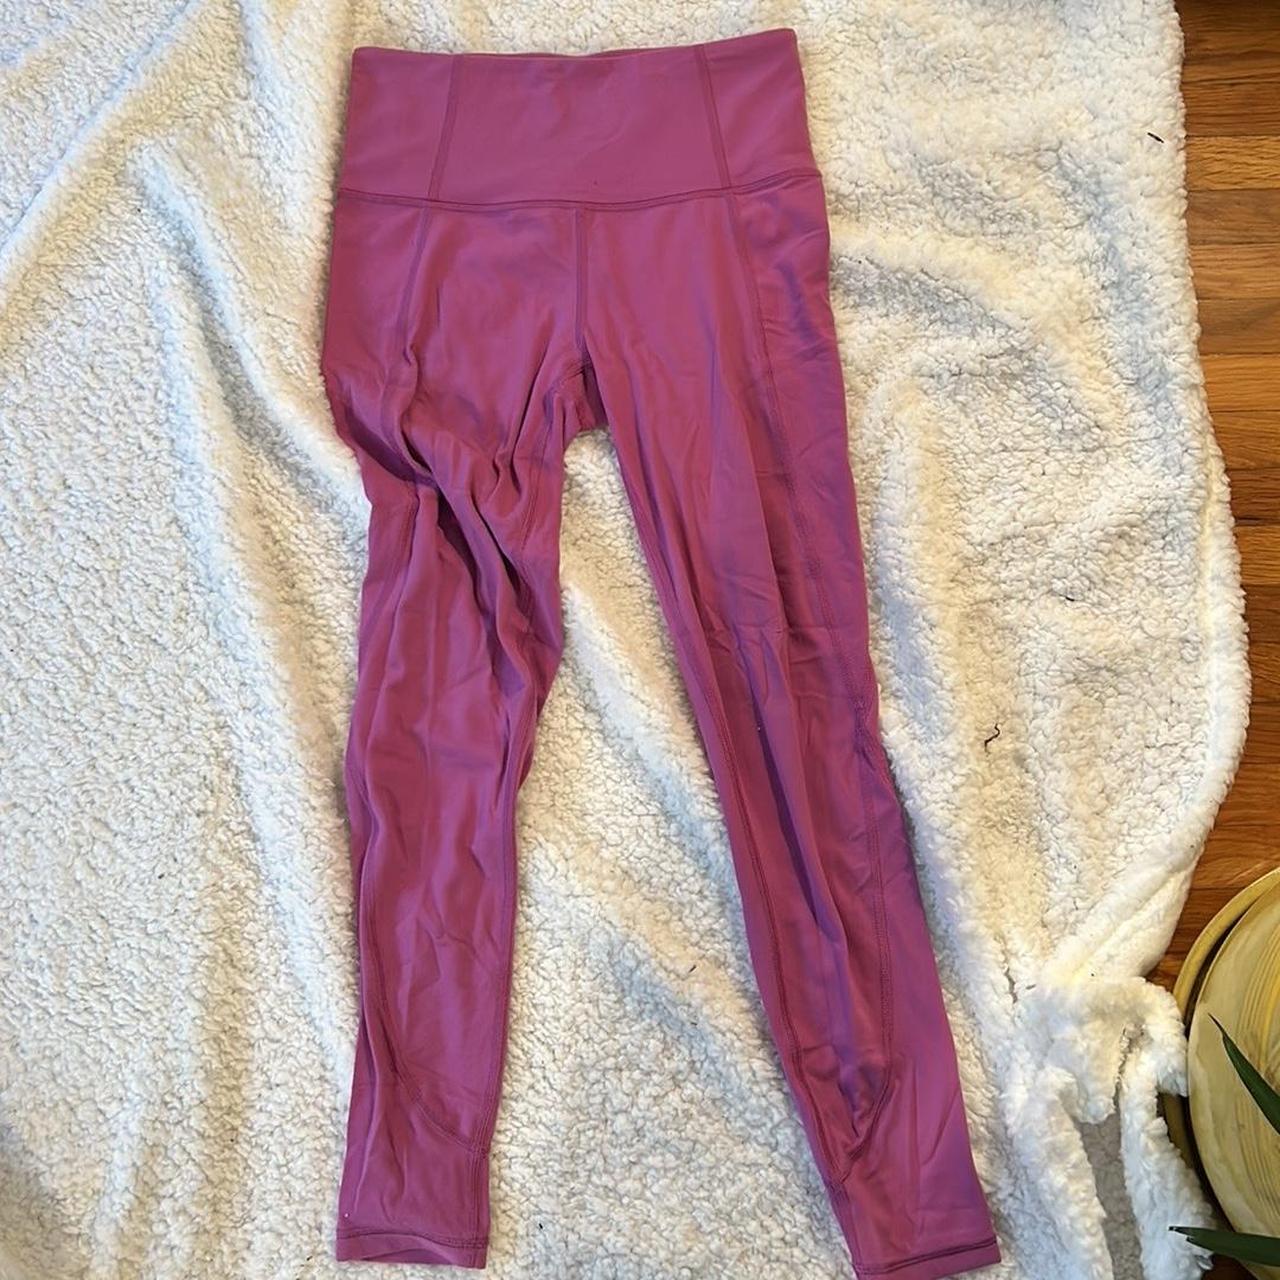 Athleta Women's Pink and Purple Leggings (5)